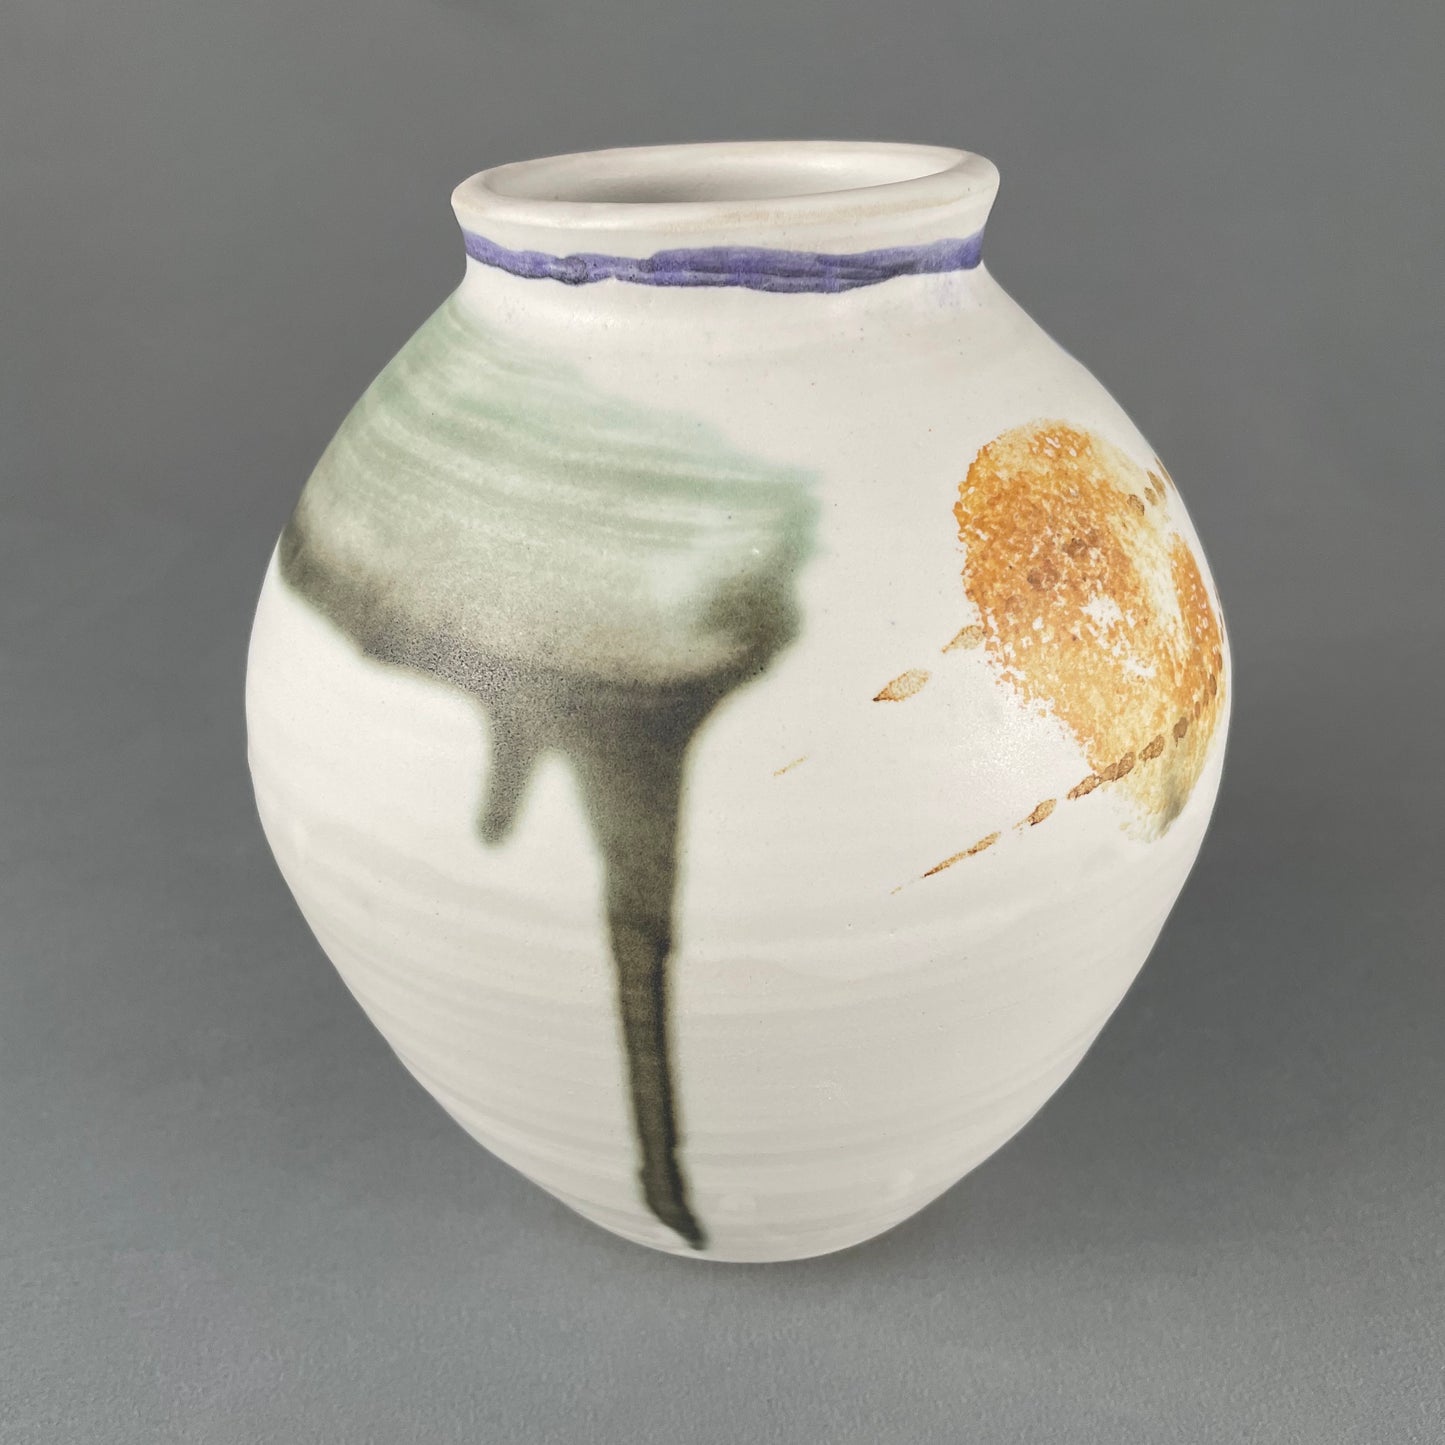 Brilliant white/abstract design vase